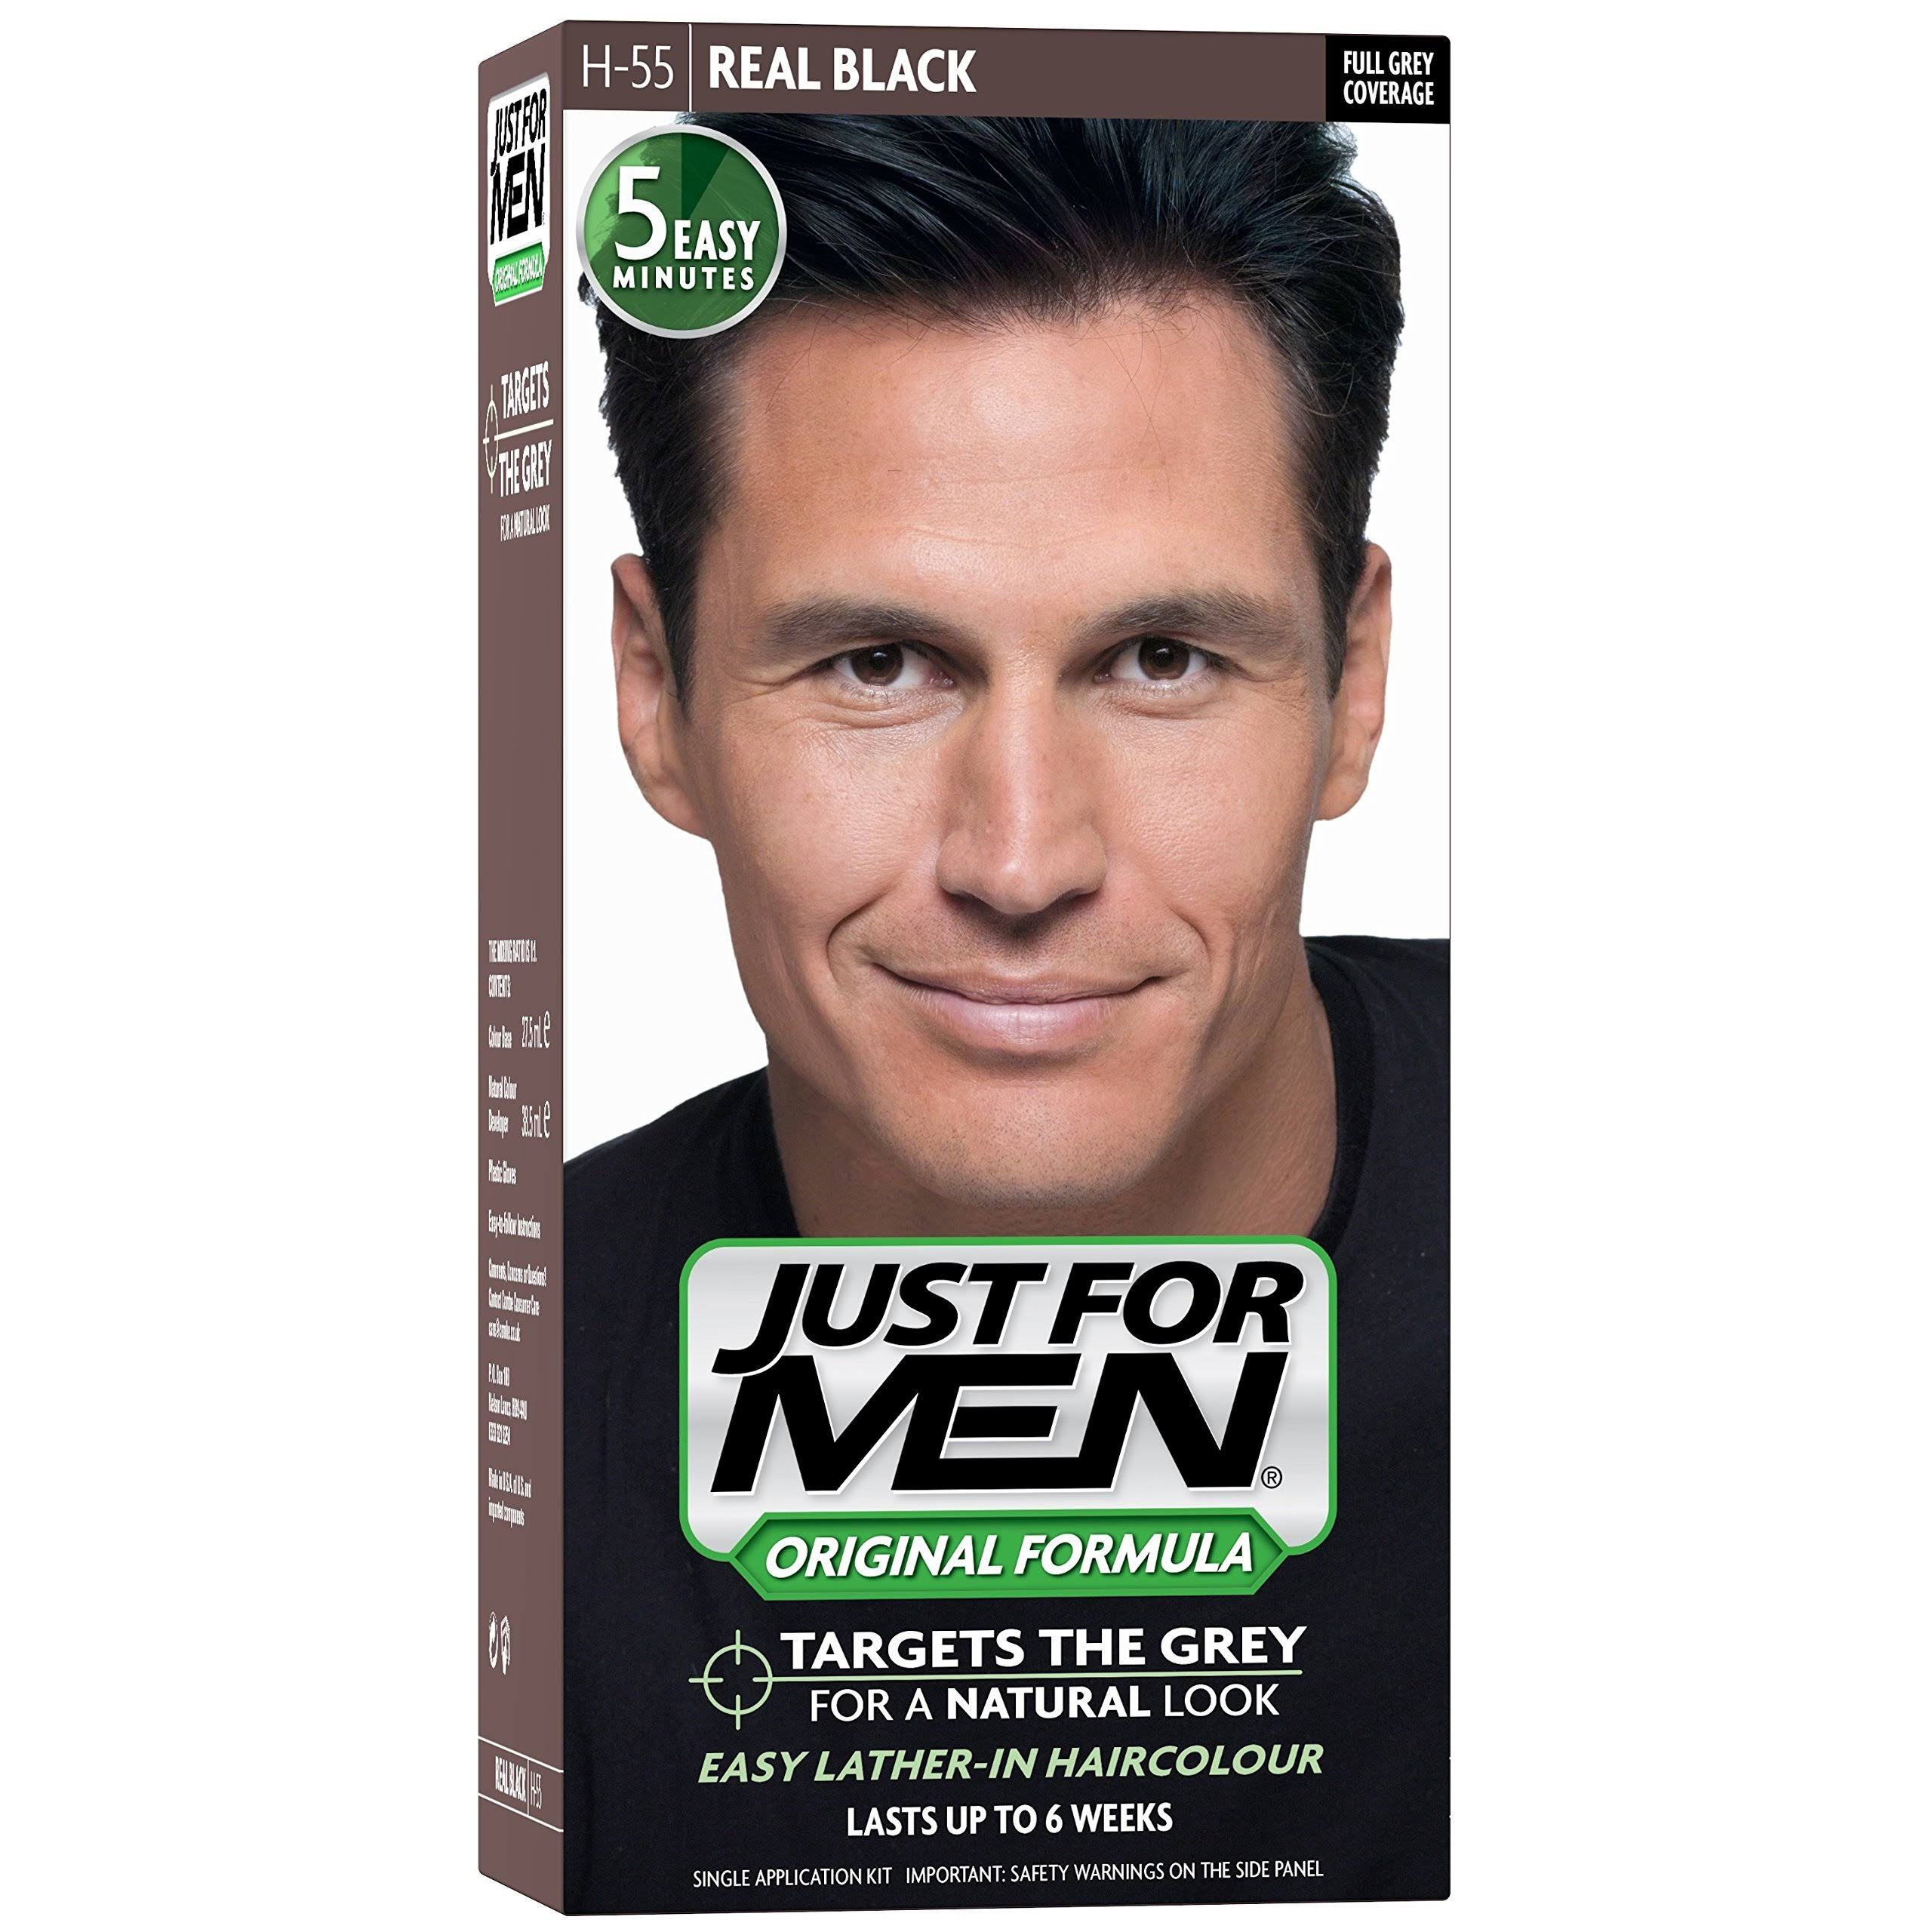 Just For Men Original Formula Hair Colour - Black